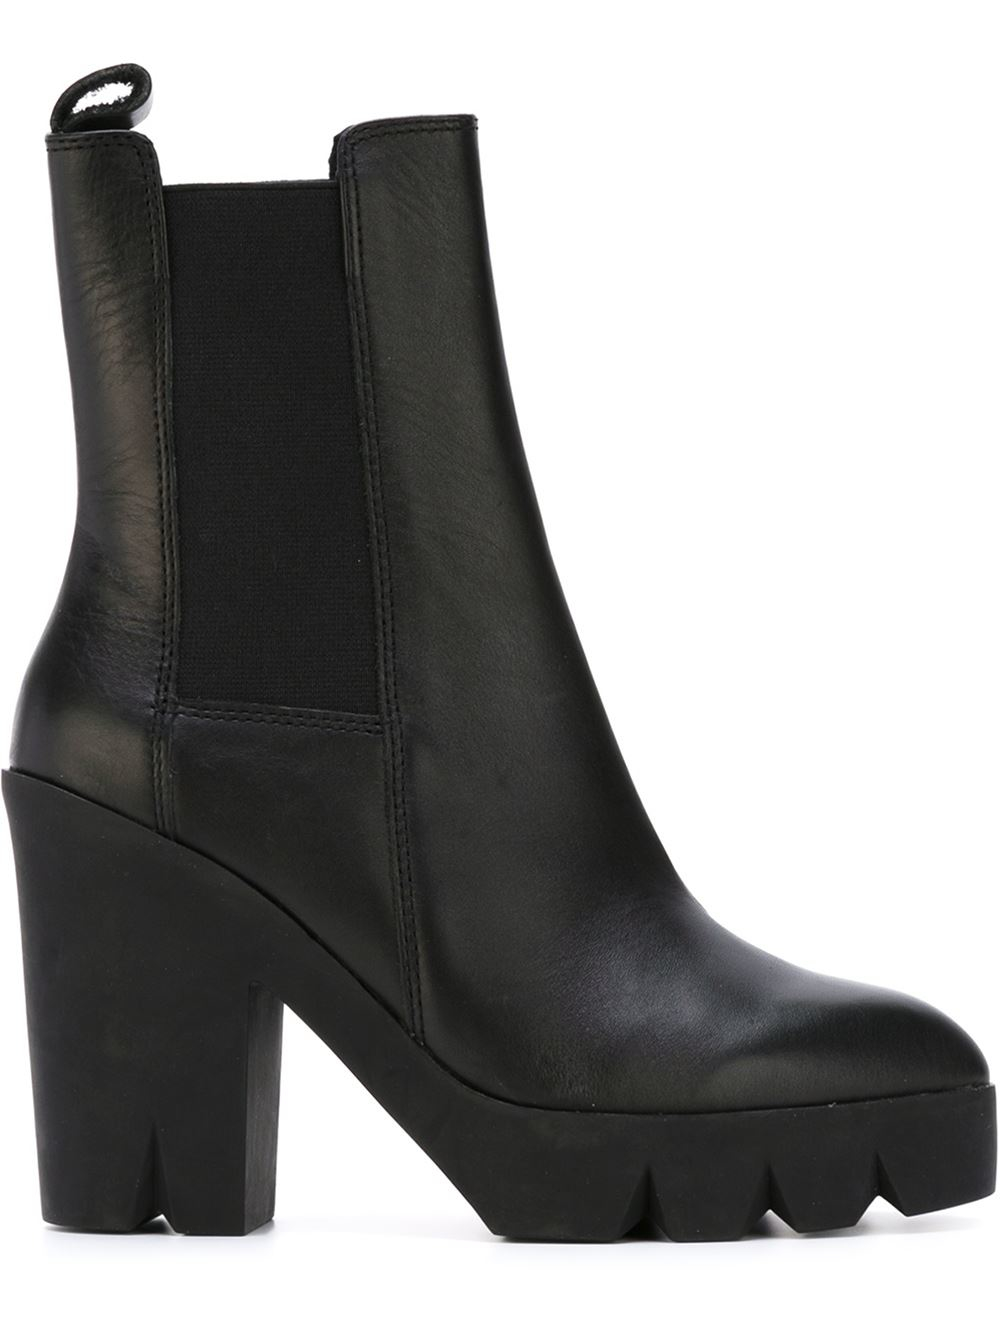 Ash Ridged Sole Block Heel Boots in Black | Lyst